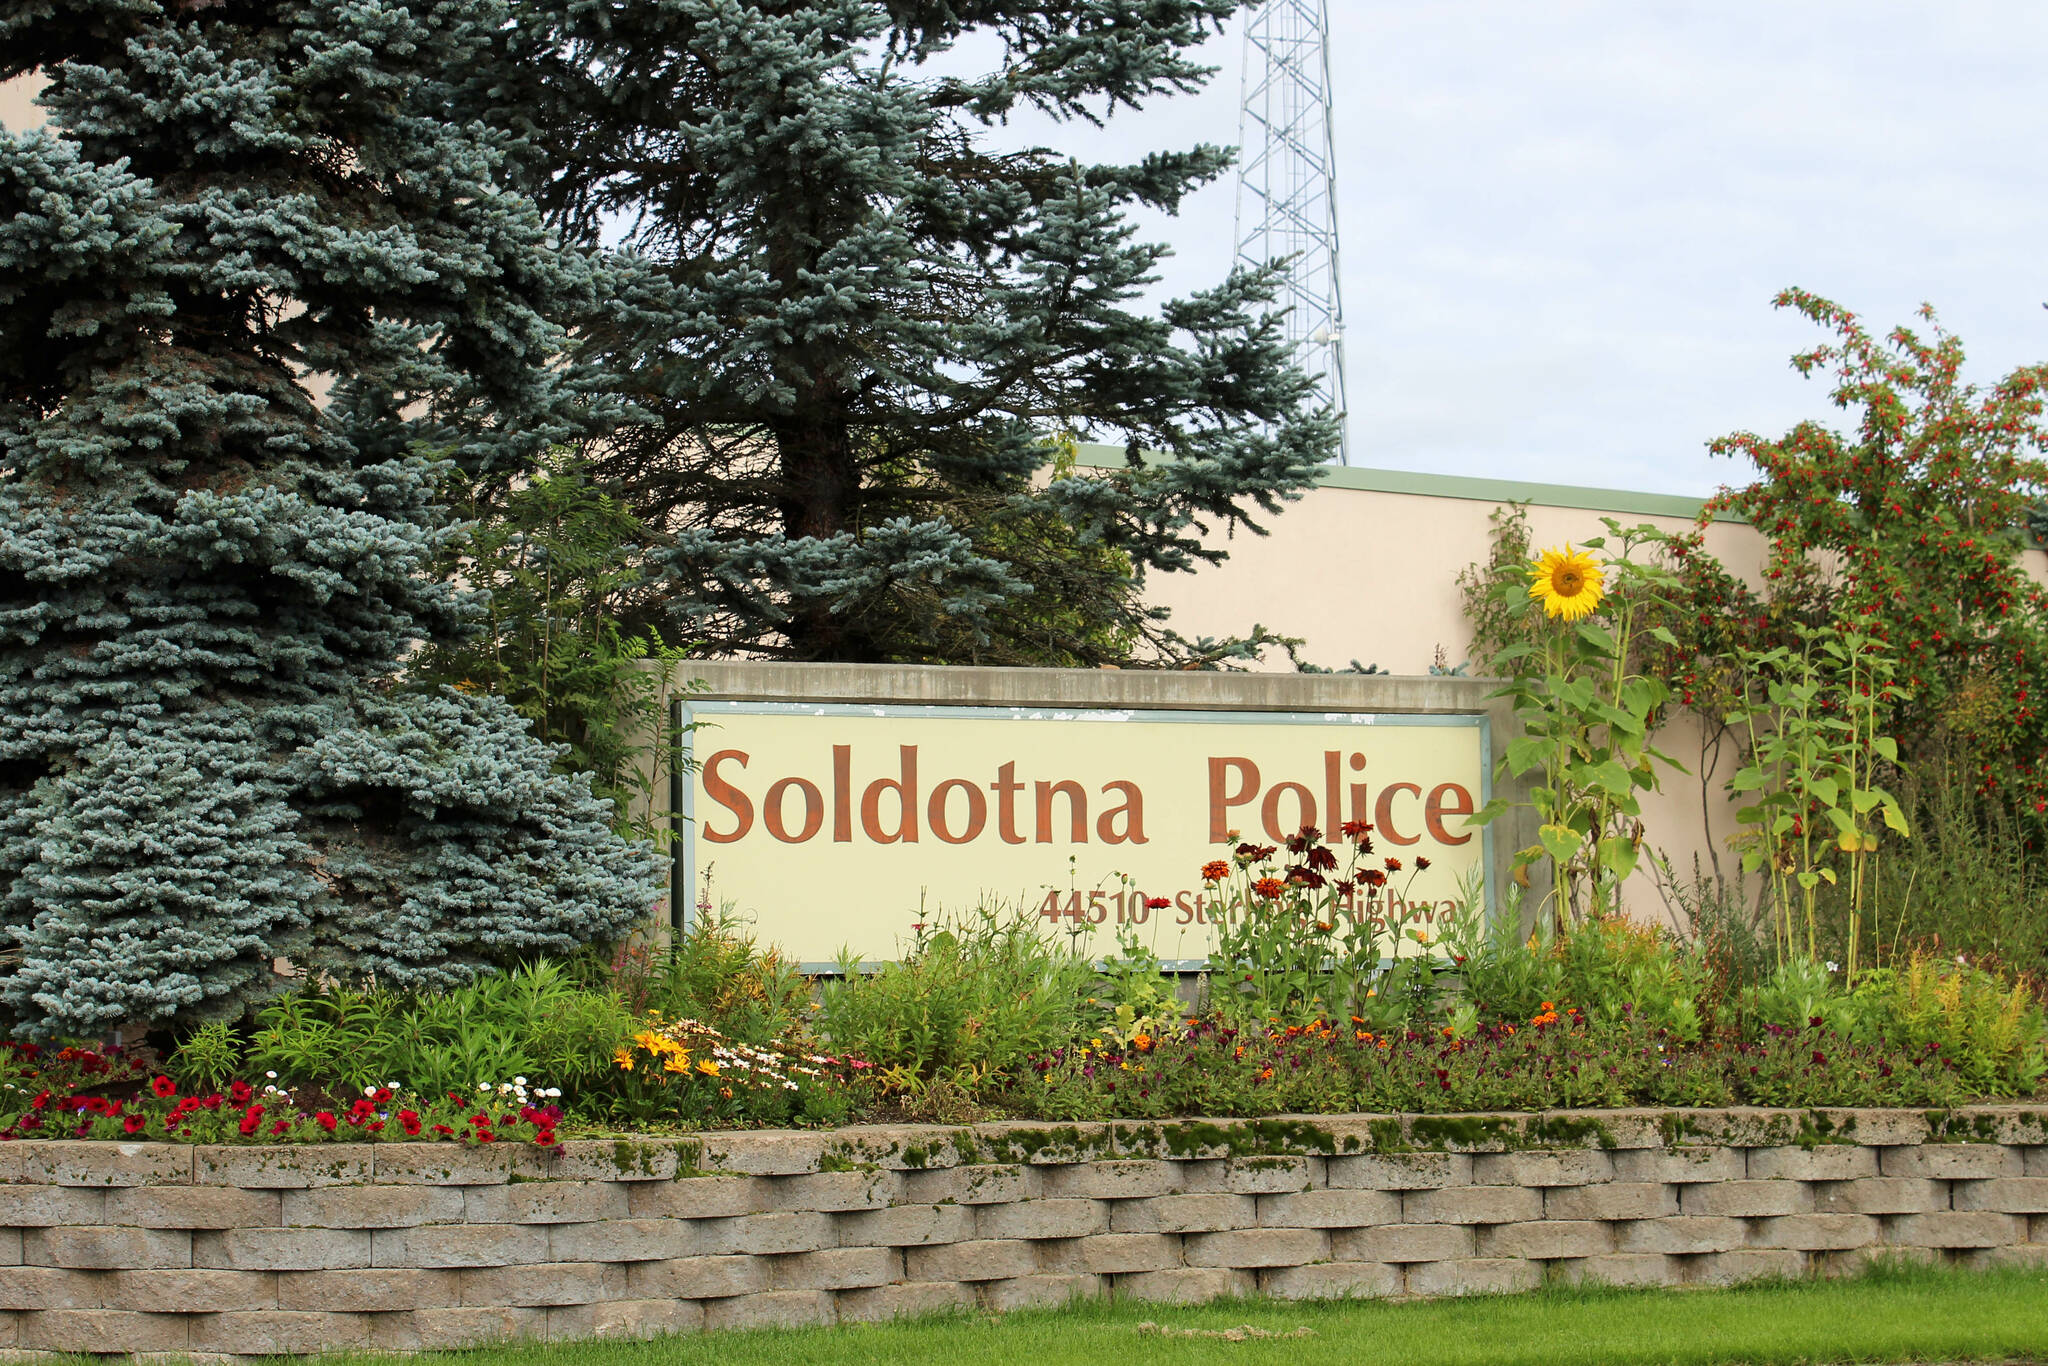 Foliage surrounds the Soldotna Police Department sign on Tuesday, Aug. 30, 2022, in Soldotna, Alaska. (Ashlyn O’Hara/Peninsula Clarion)